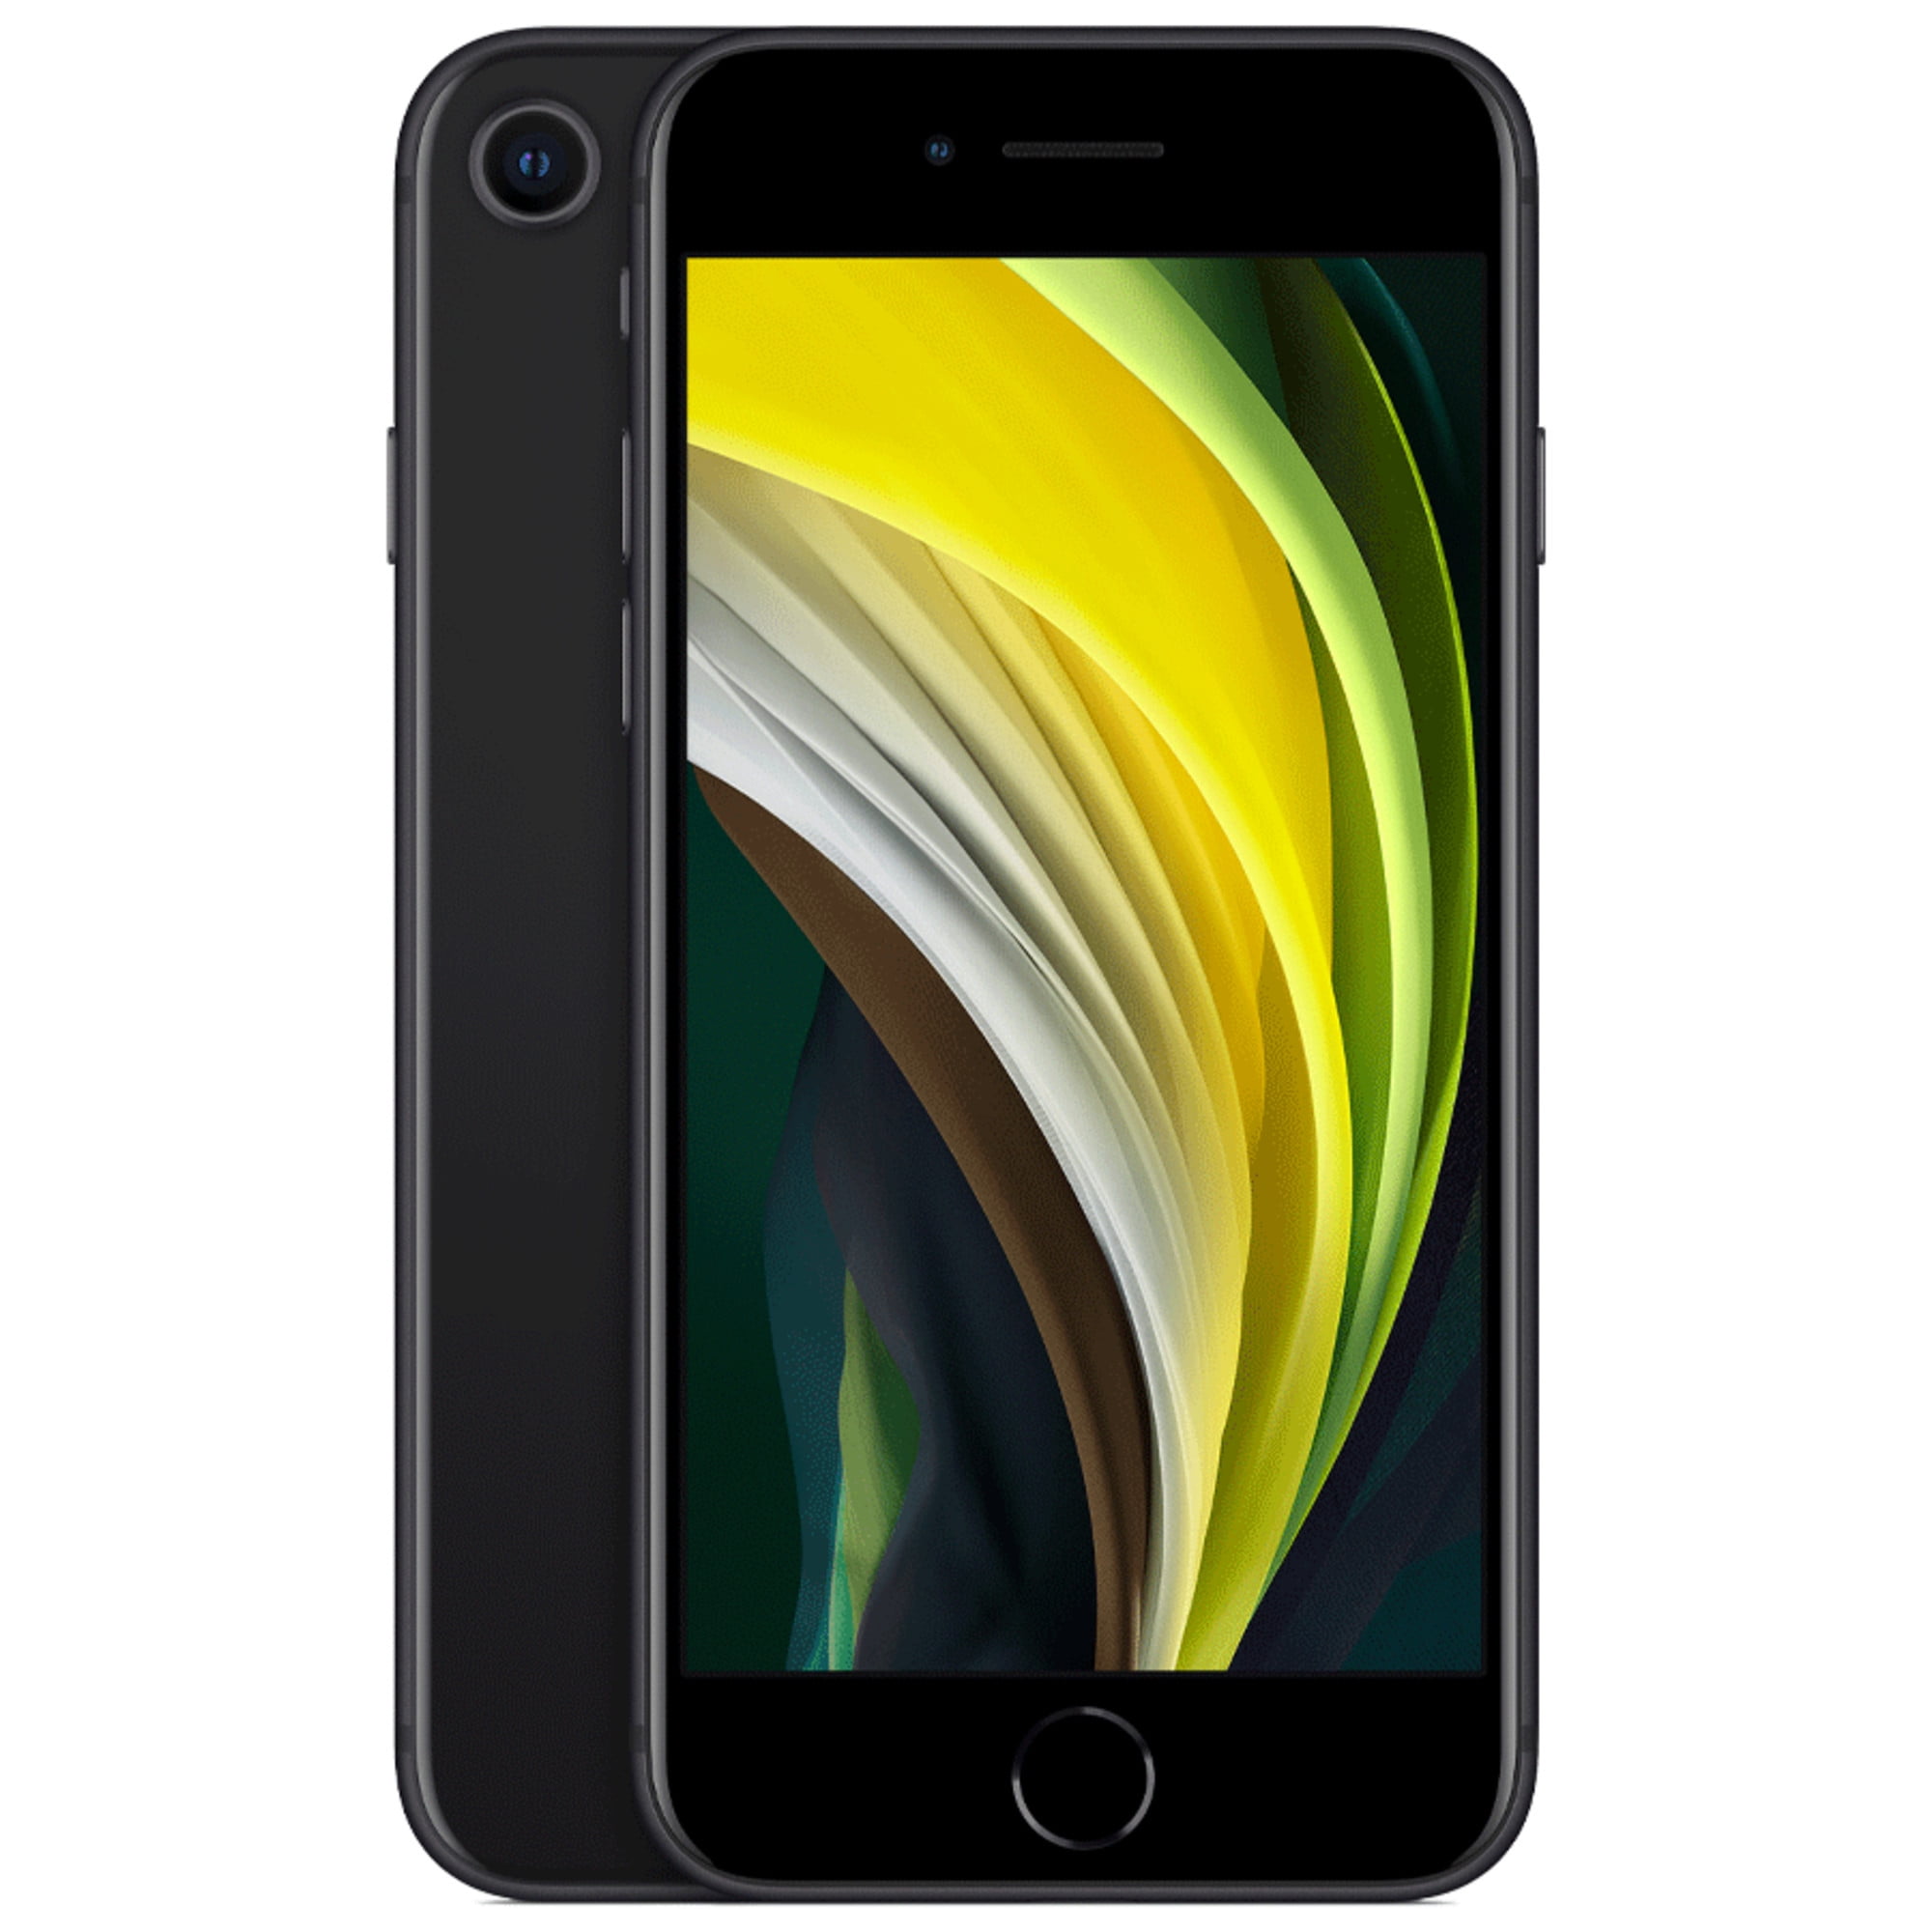 iPhone SE 2020 Review: Apple's $399 iPhone brings unprecedented value